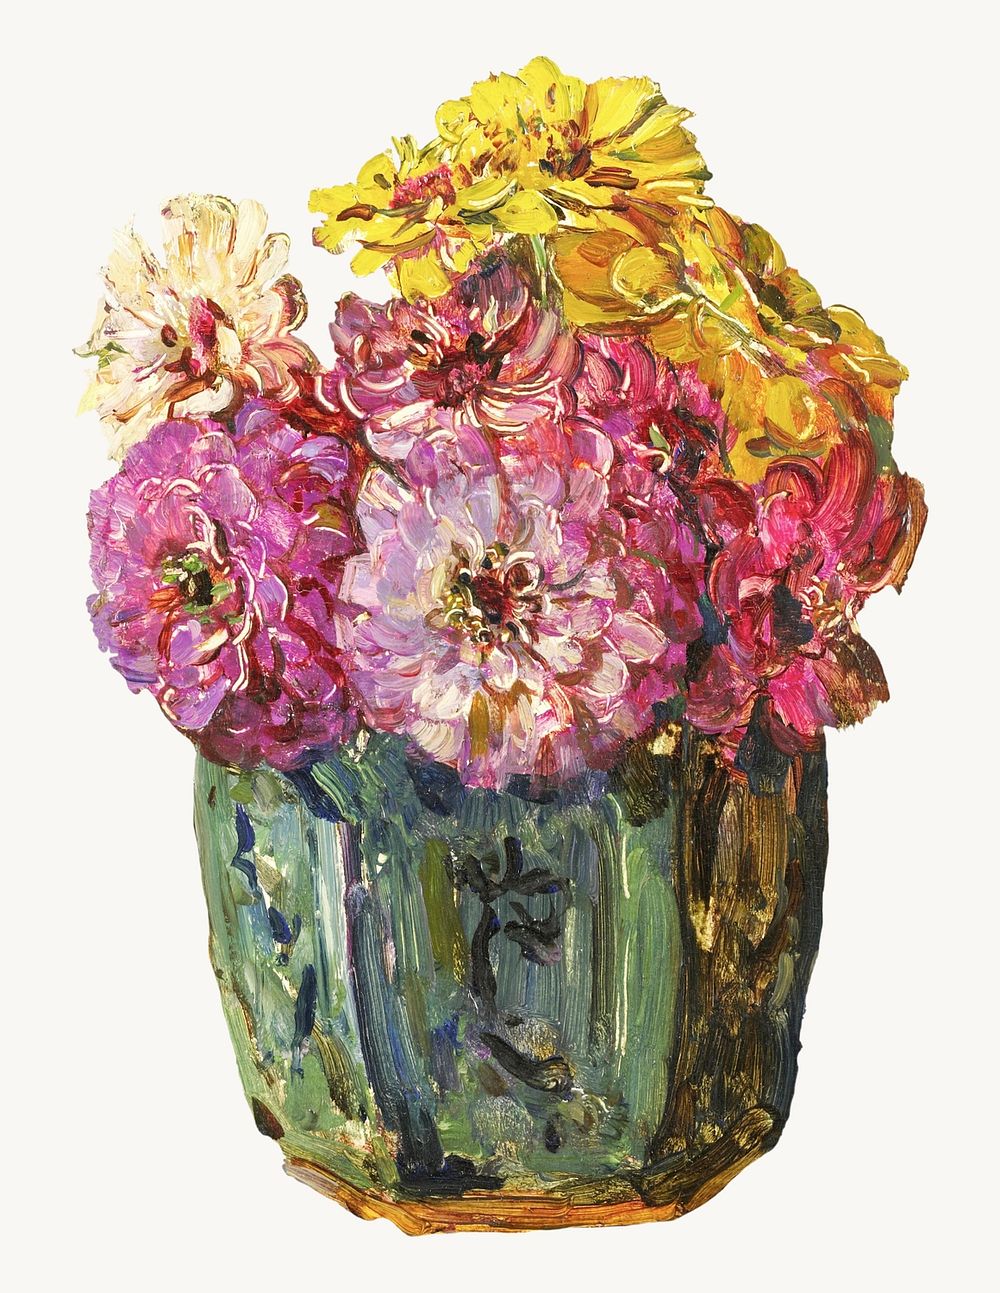 Vintage zinnias flower illustration psd, remix from artworks by Floris Verster